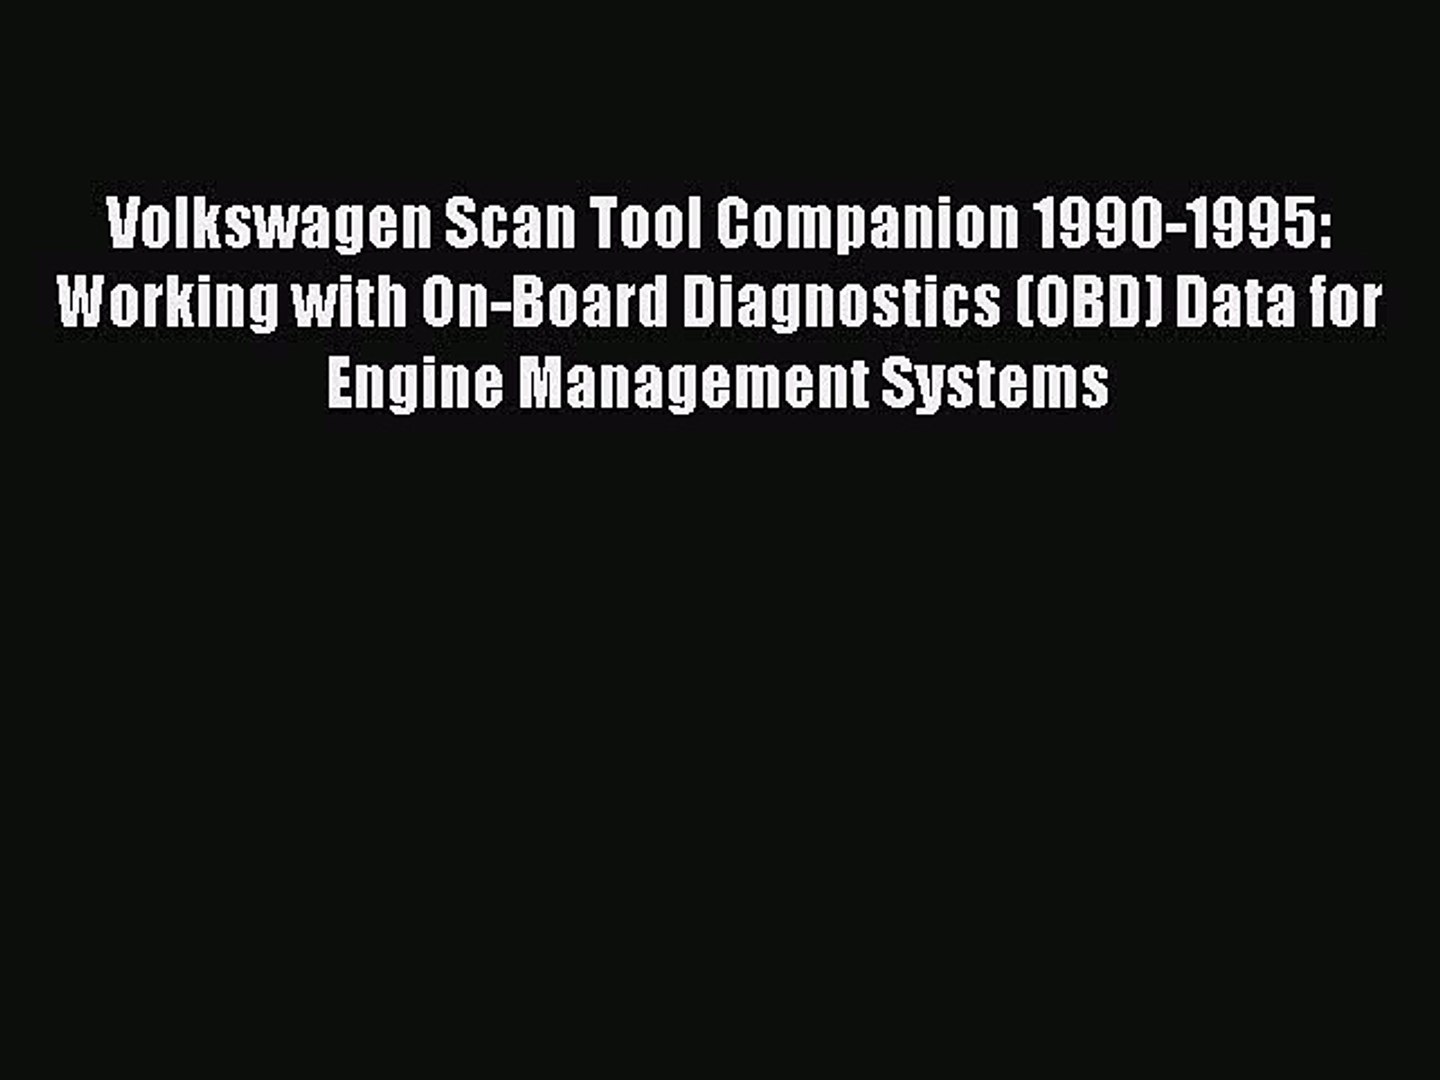 VW Scan Tool Companion 1990-1995